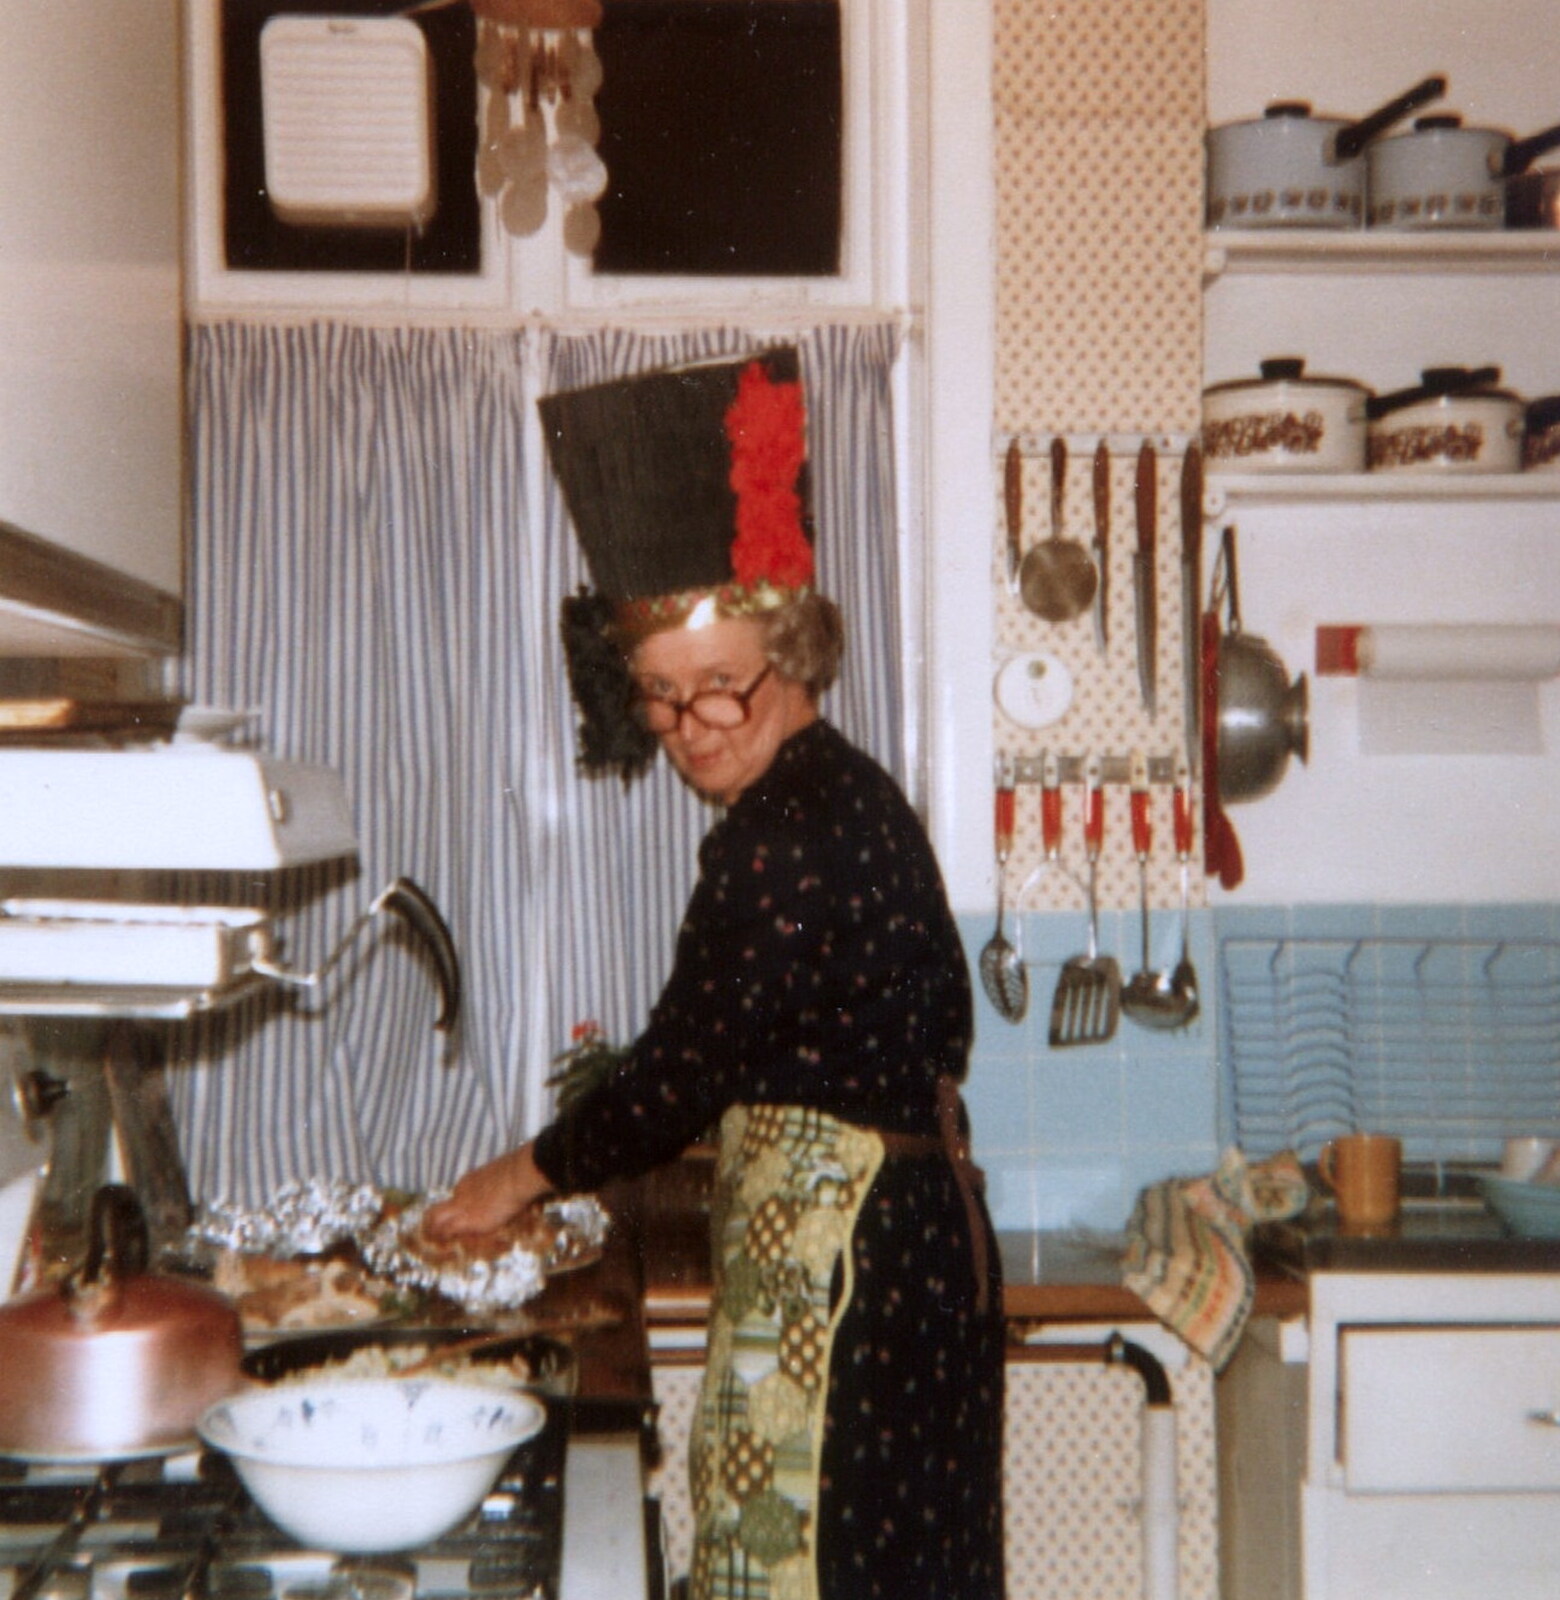 Family History: Danesbury Avenue, Tuckton, Christchurch, Dorset - 24th January 2020: Grandmother prepares some Christmas dinner